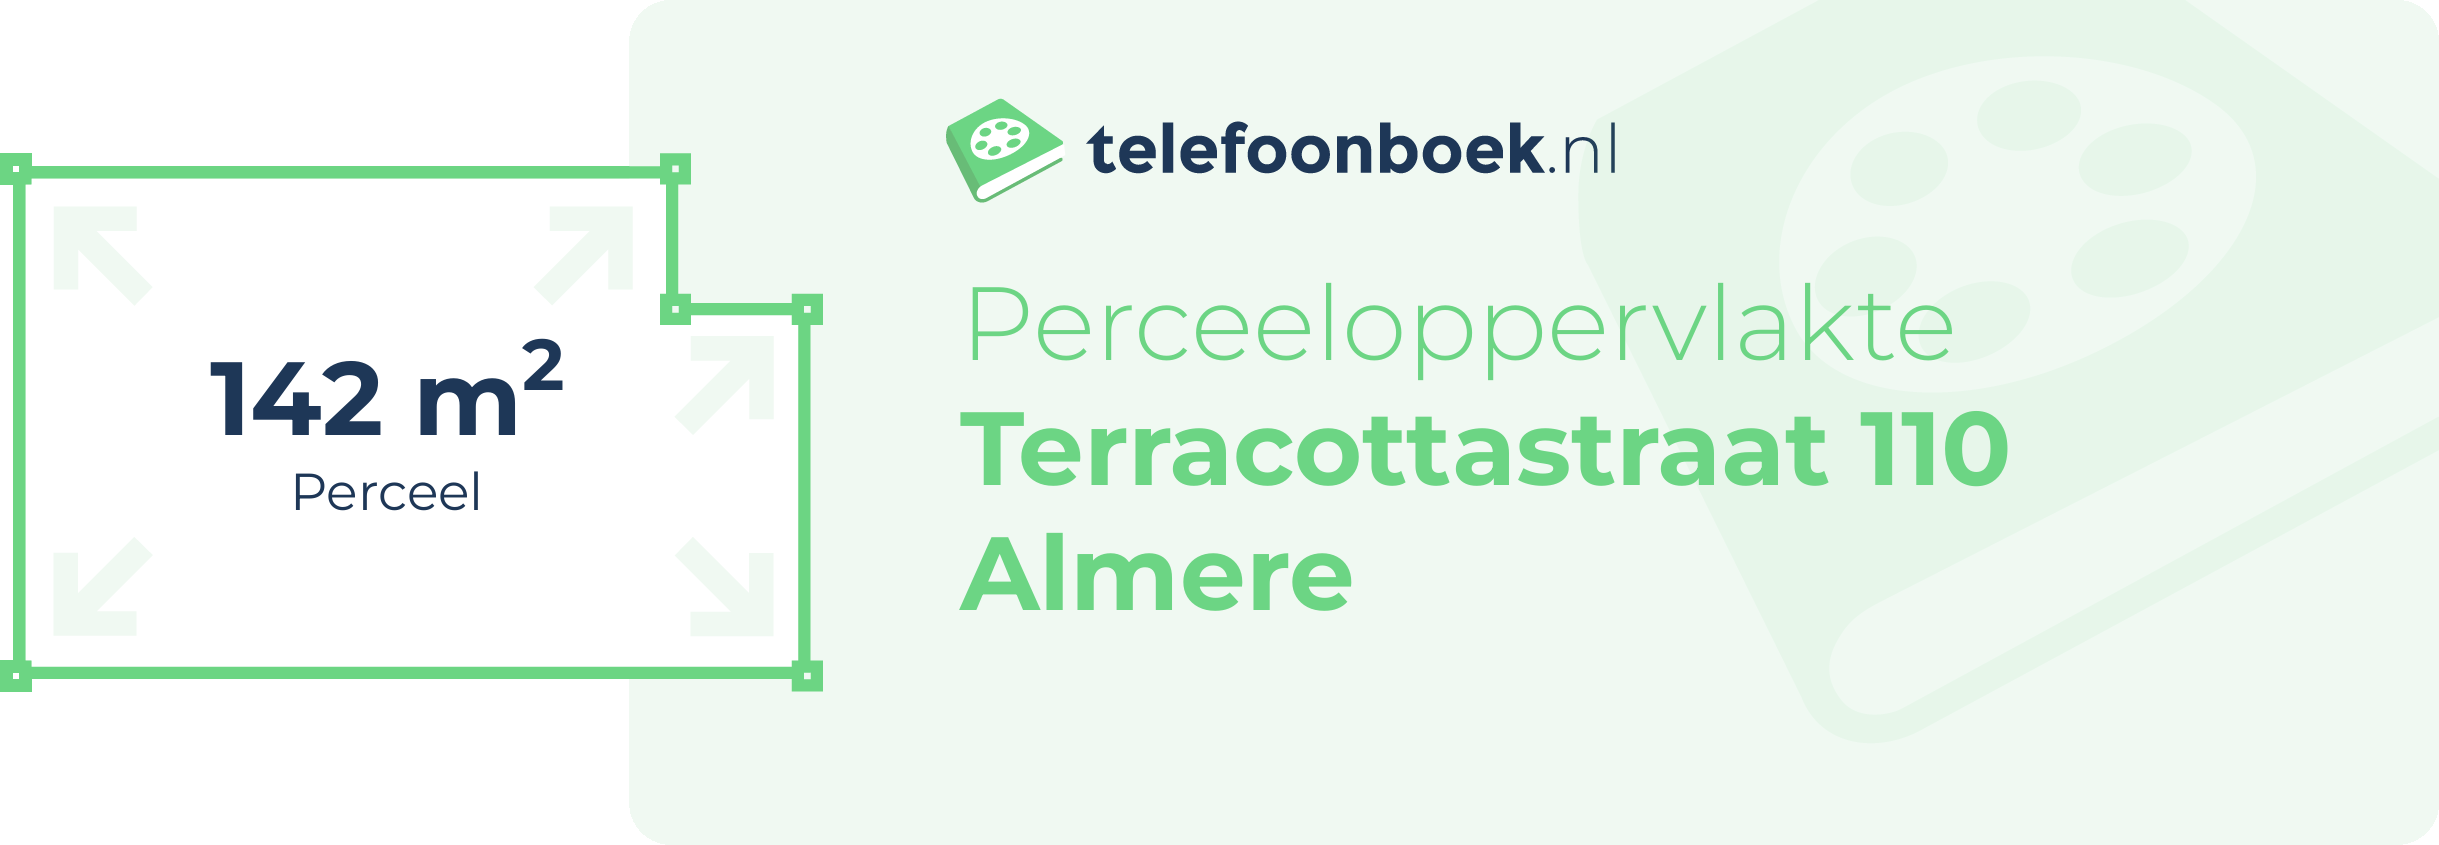 Perceeloppervlakte Terracottastraat 110 Almere